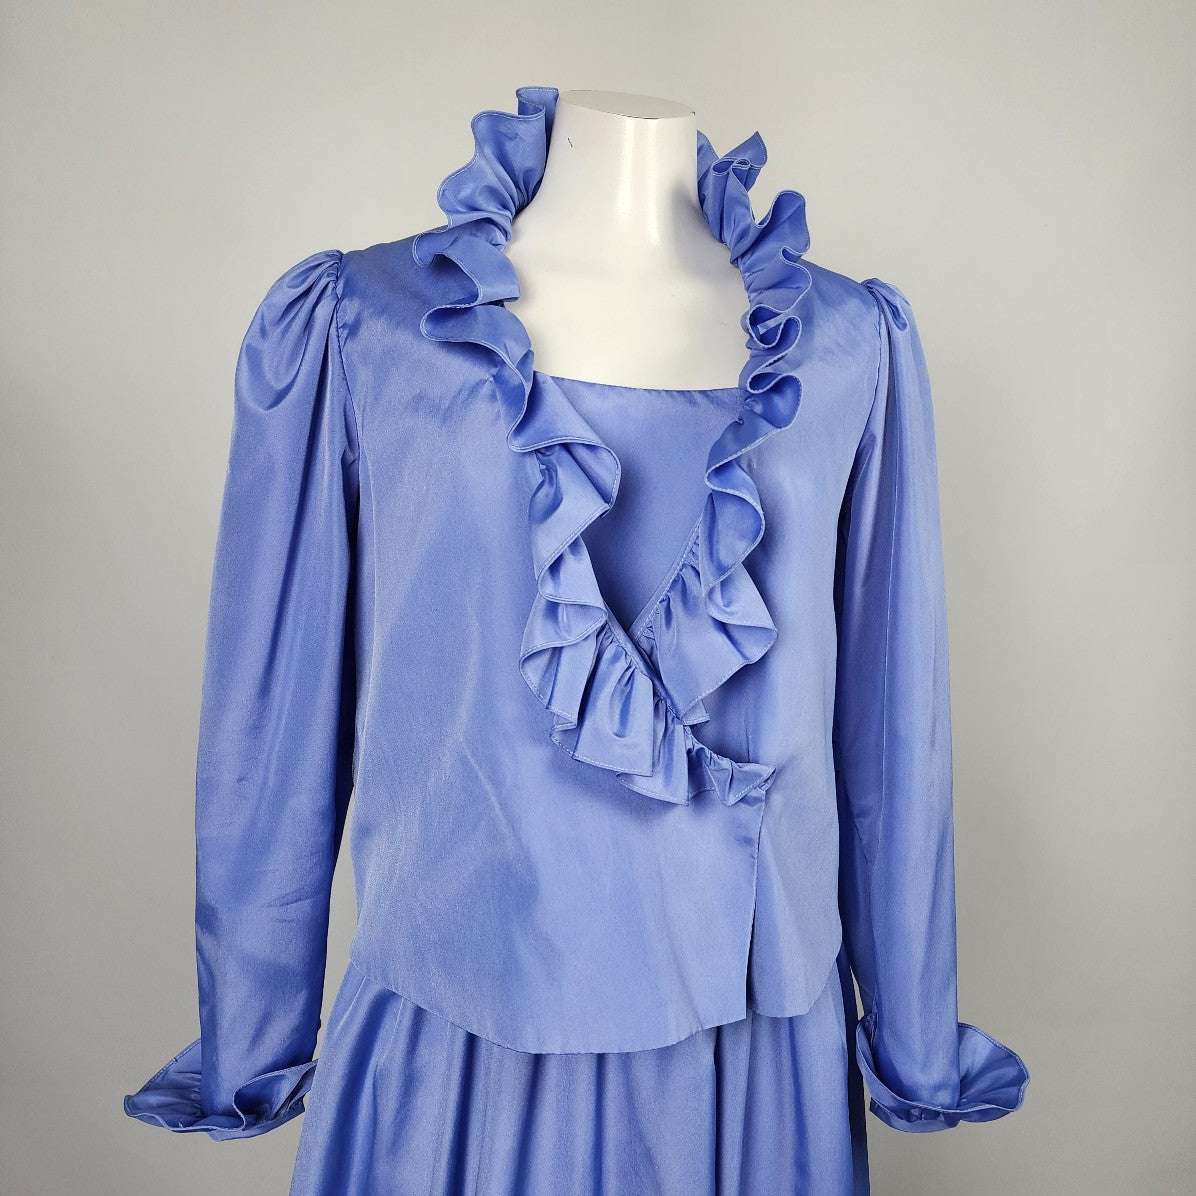 Vintage Periwinkle Satin Dress with Ruffle Jacket Size S/M